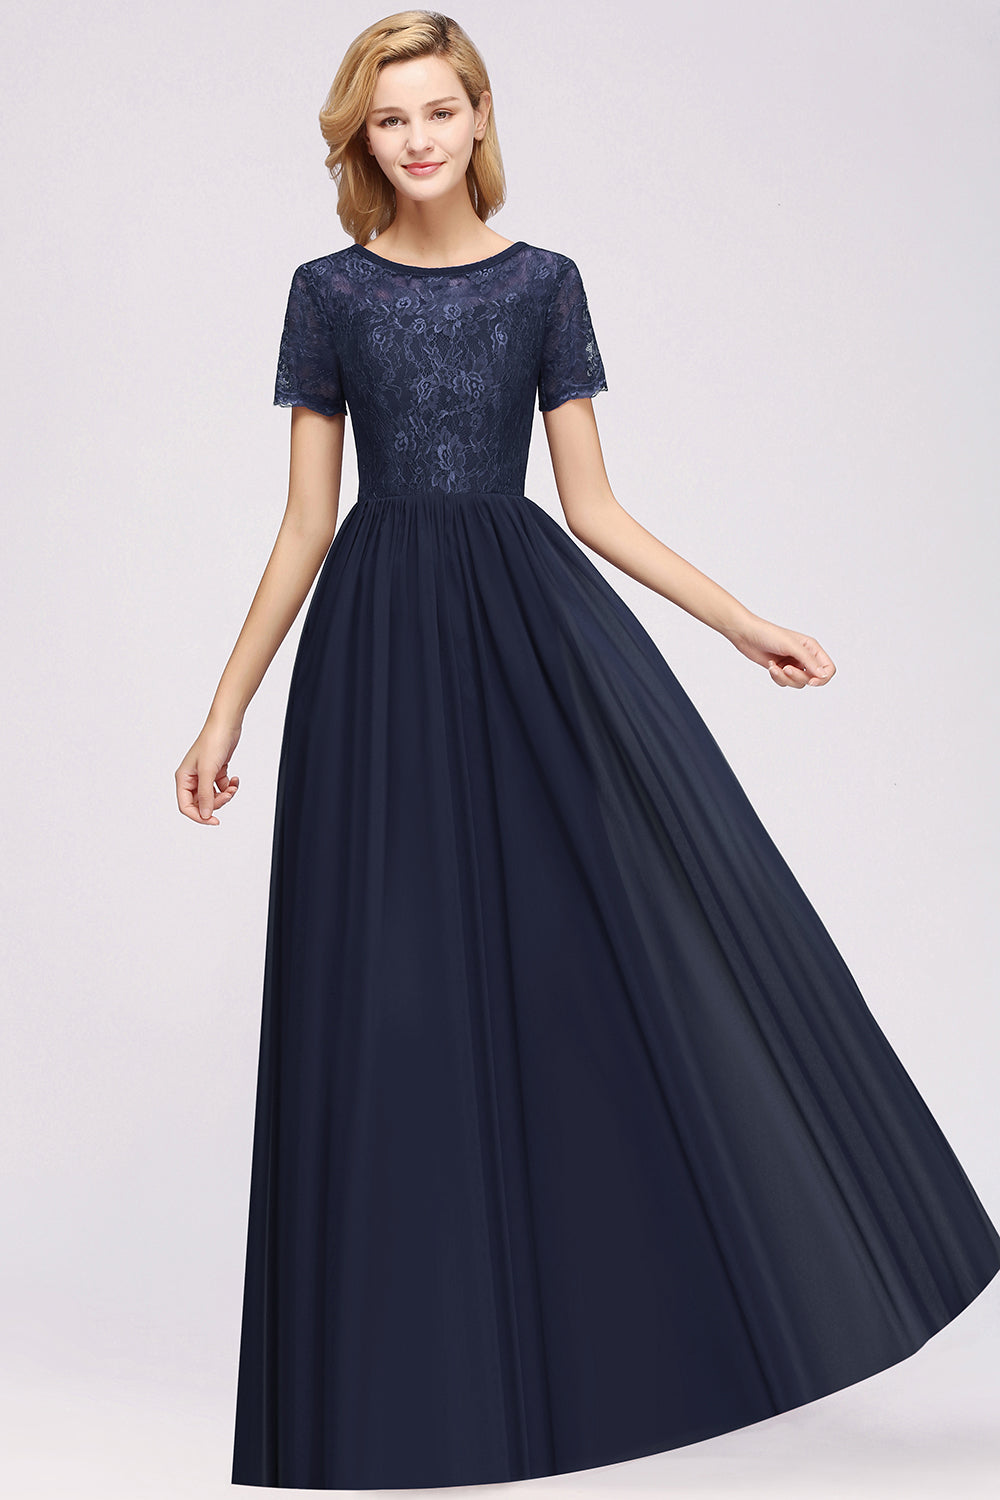 Elegant Dark Navy Long Lace Bridesmaid Dresses with Short-Sleeves-27dress